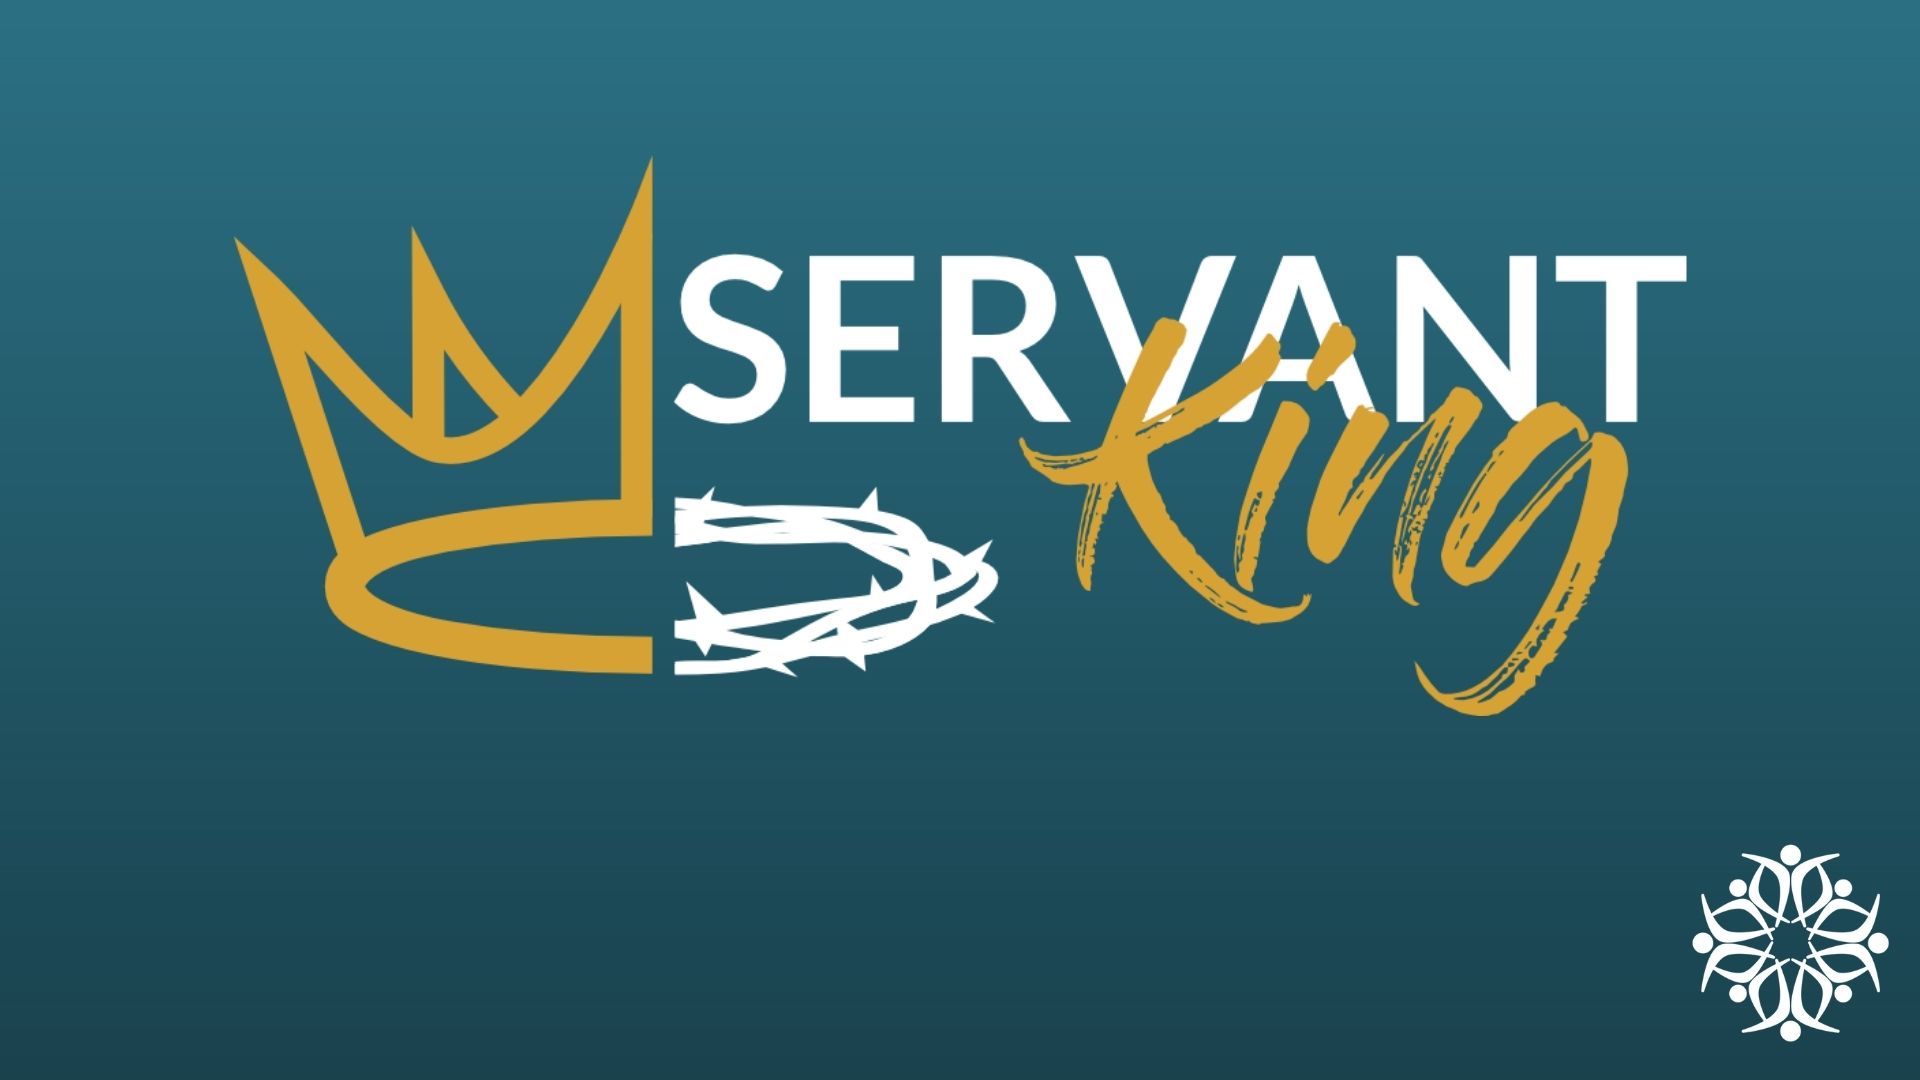 The Scandalous Grace of the Servant King